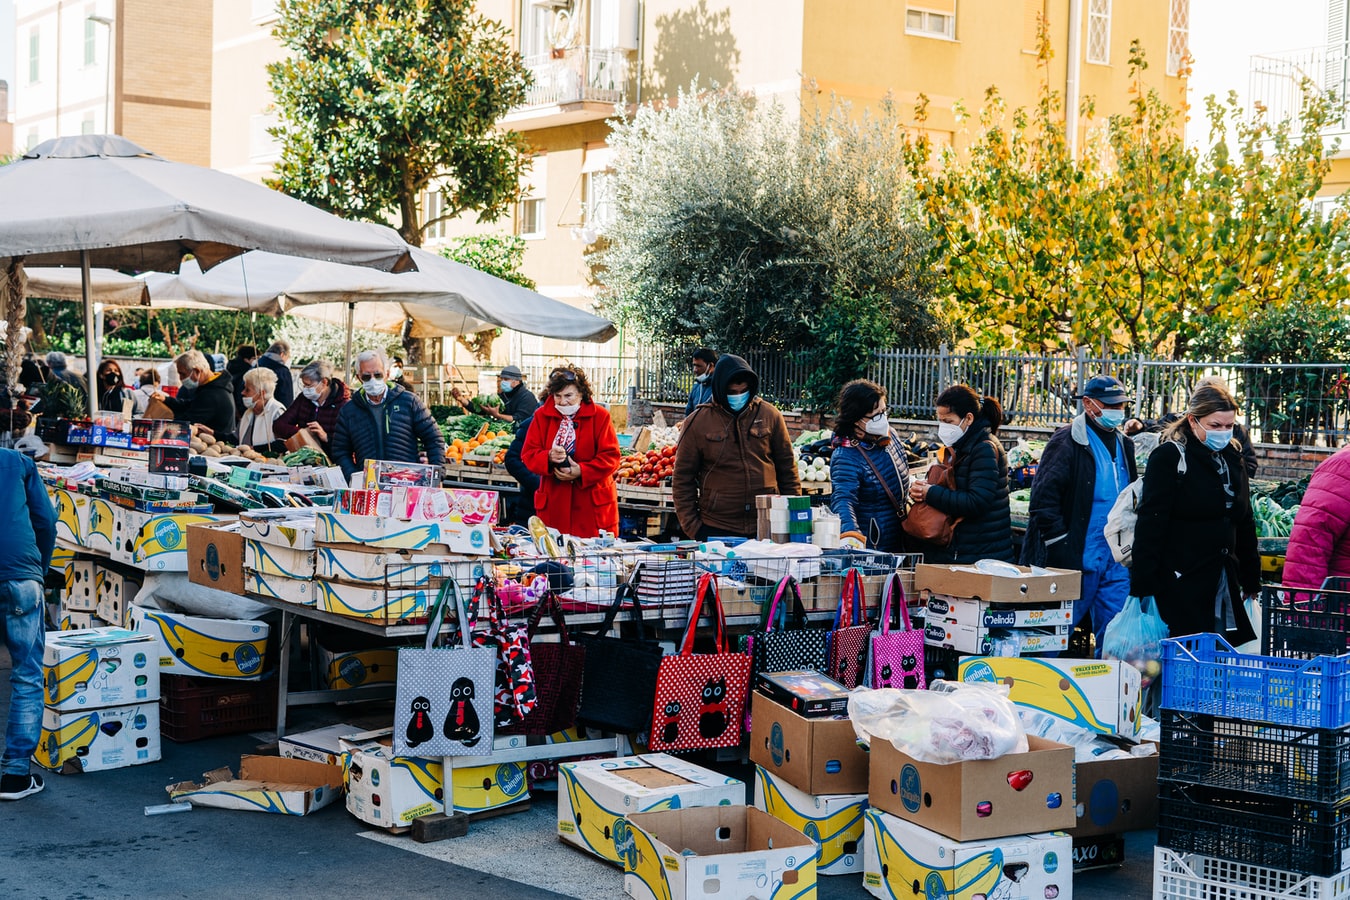 City market in Rome